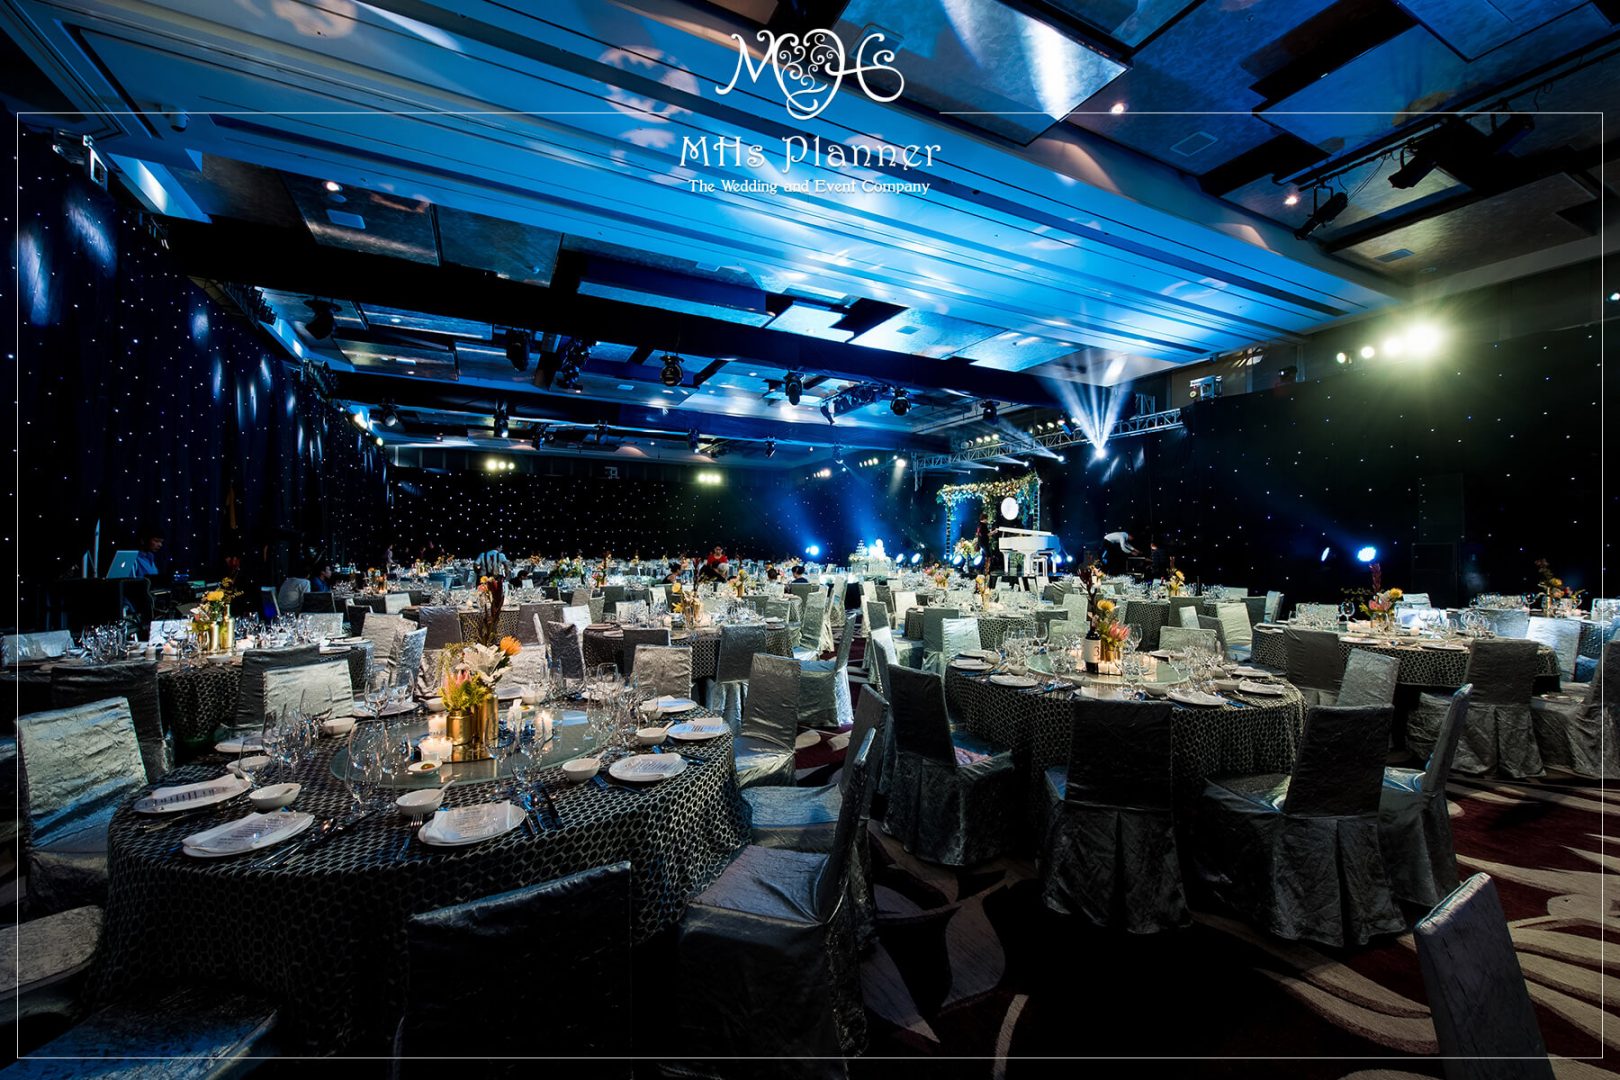 Lotte Hotel Hanoi – Crystal Ballroom | Concept: Over The Moon